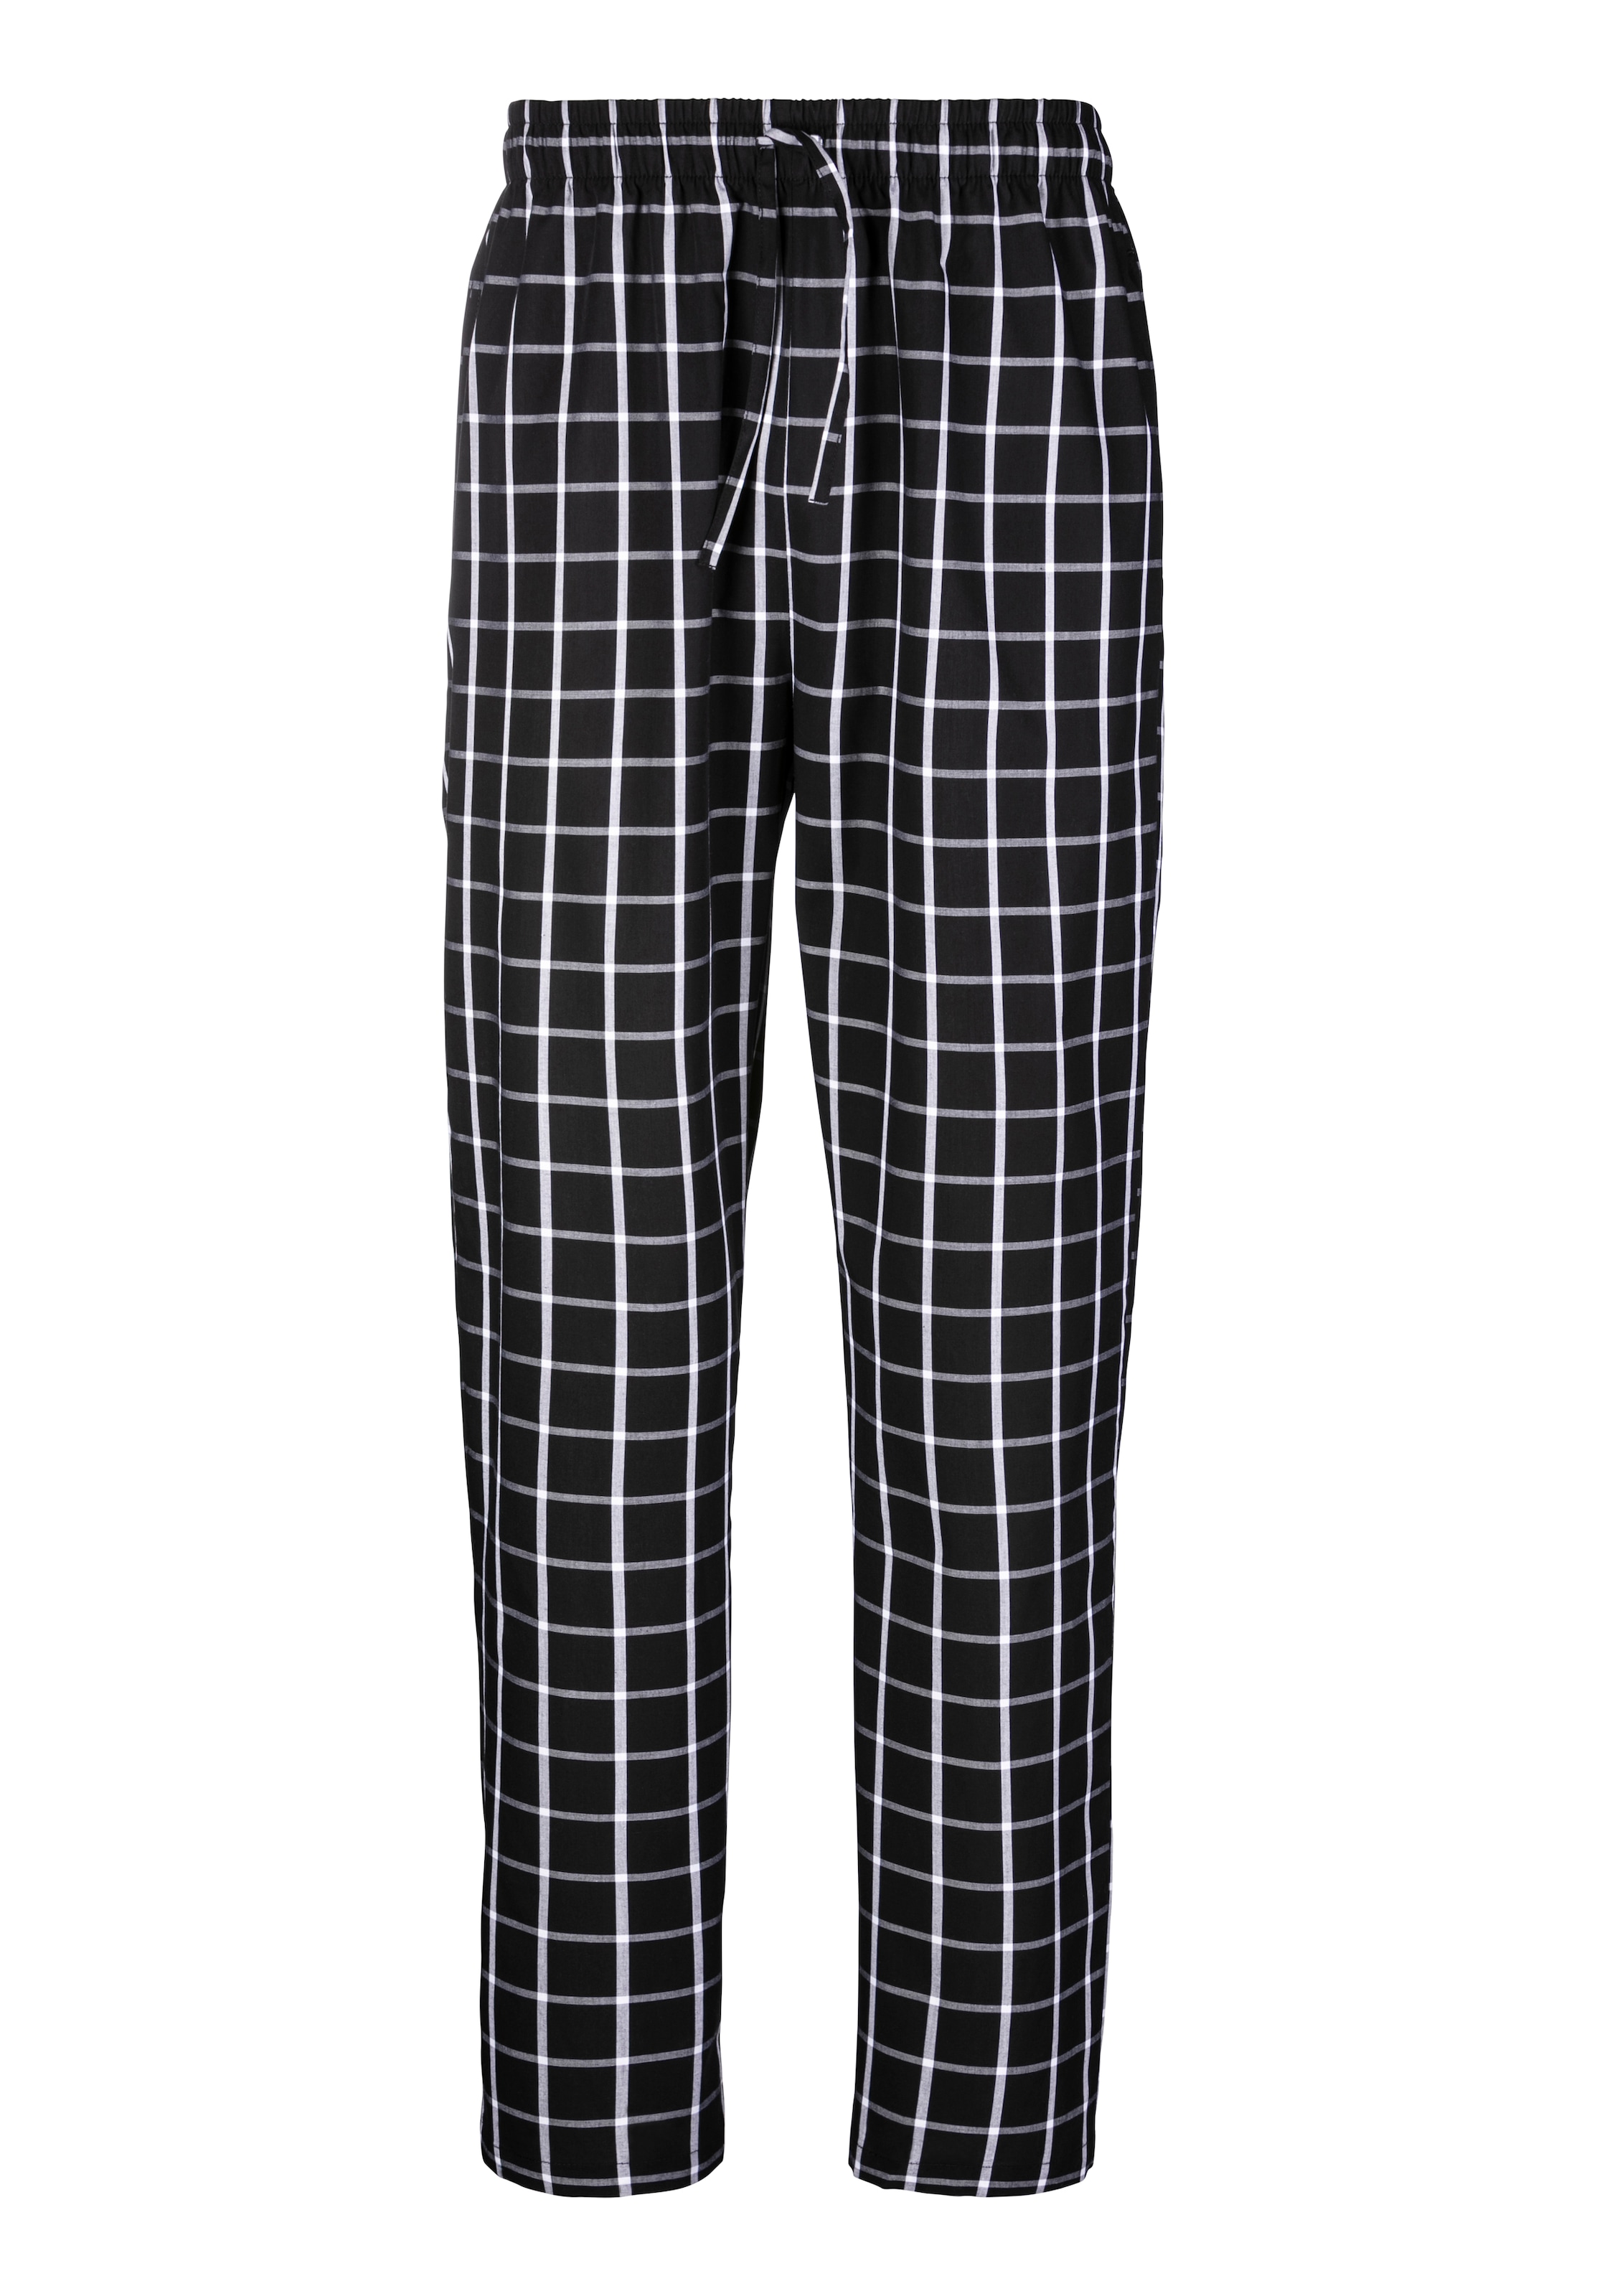 AUTHENTIC LE JOGGER Pyjama, (2 tlg., 1 Stück), mit karierter Webhose